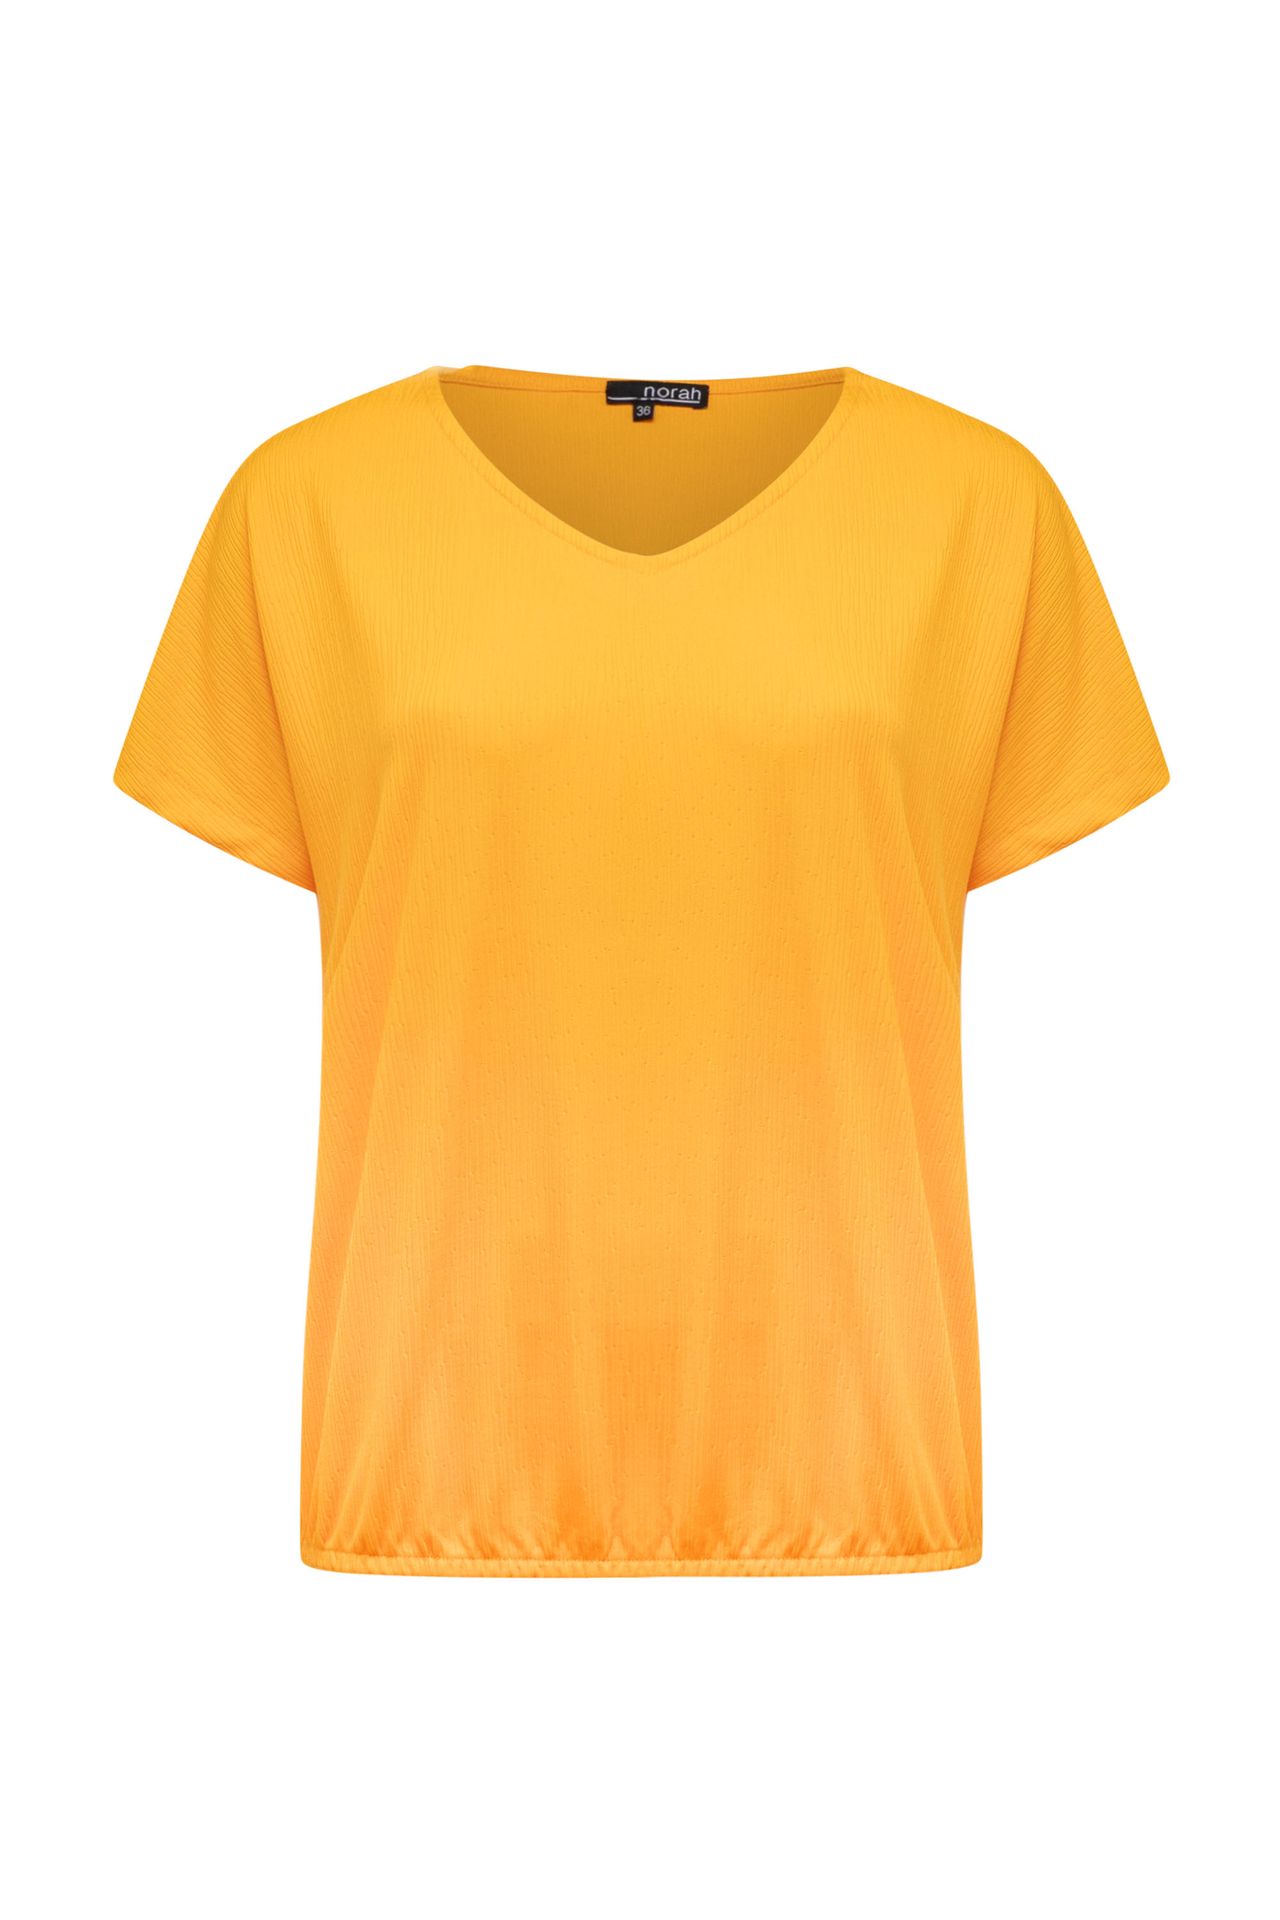  Mangokleurig shirt mango 211648-304-42